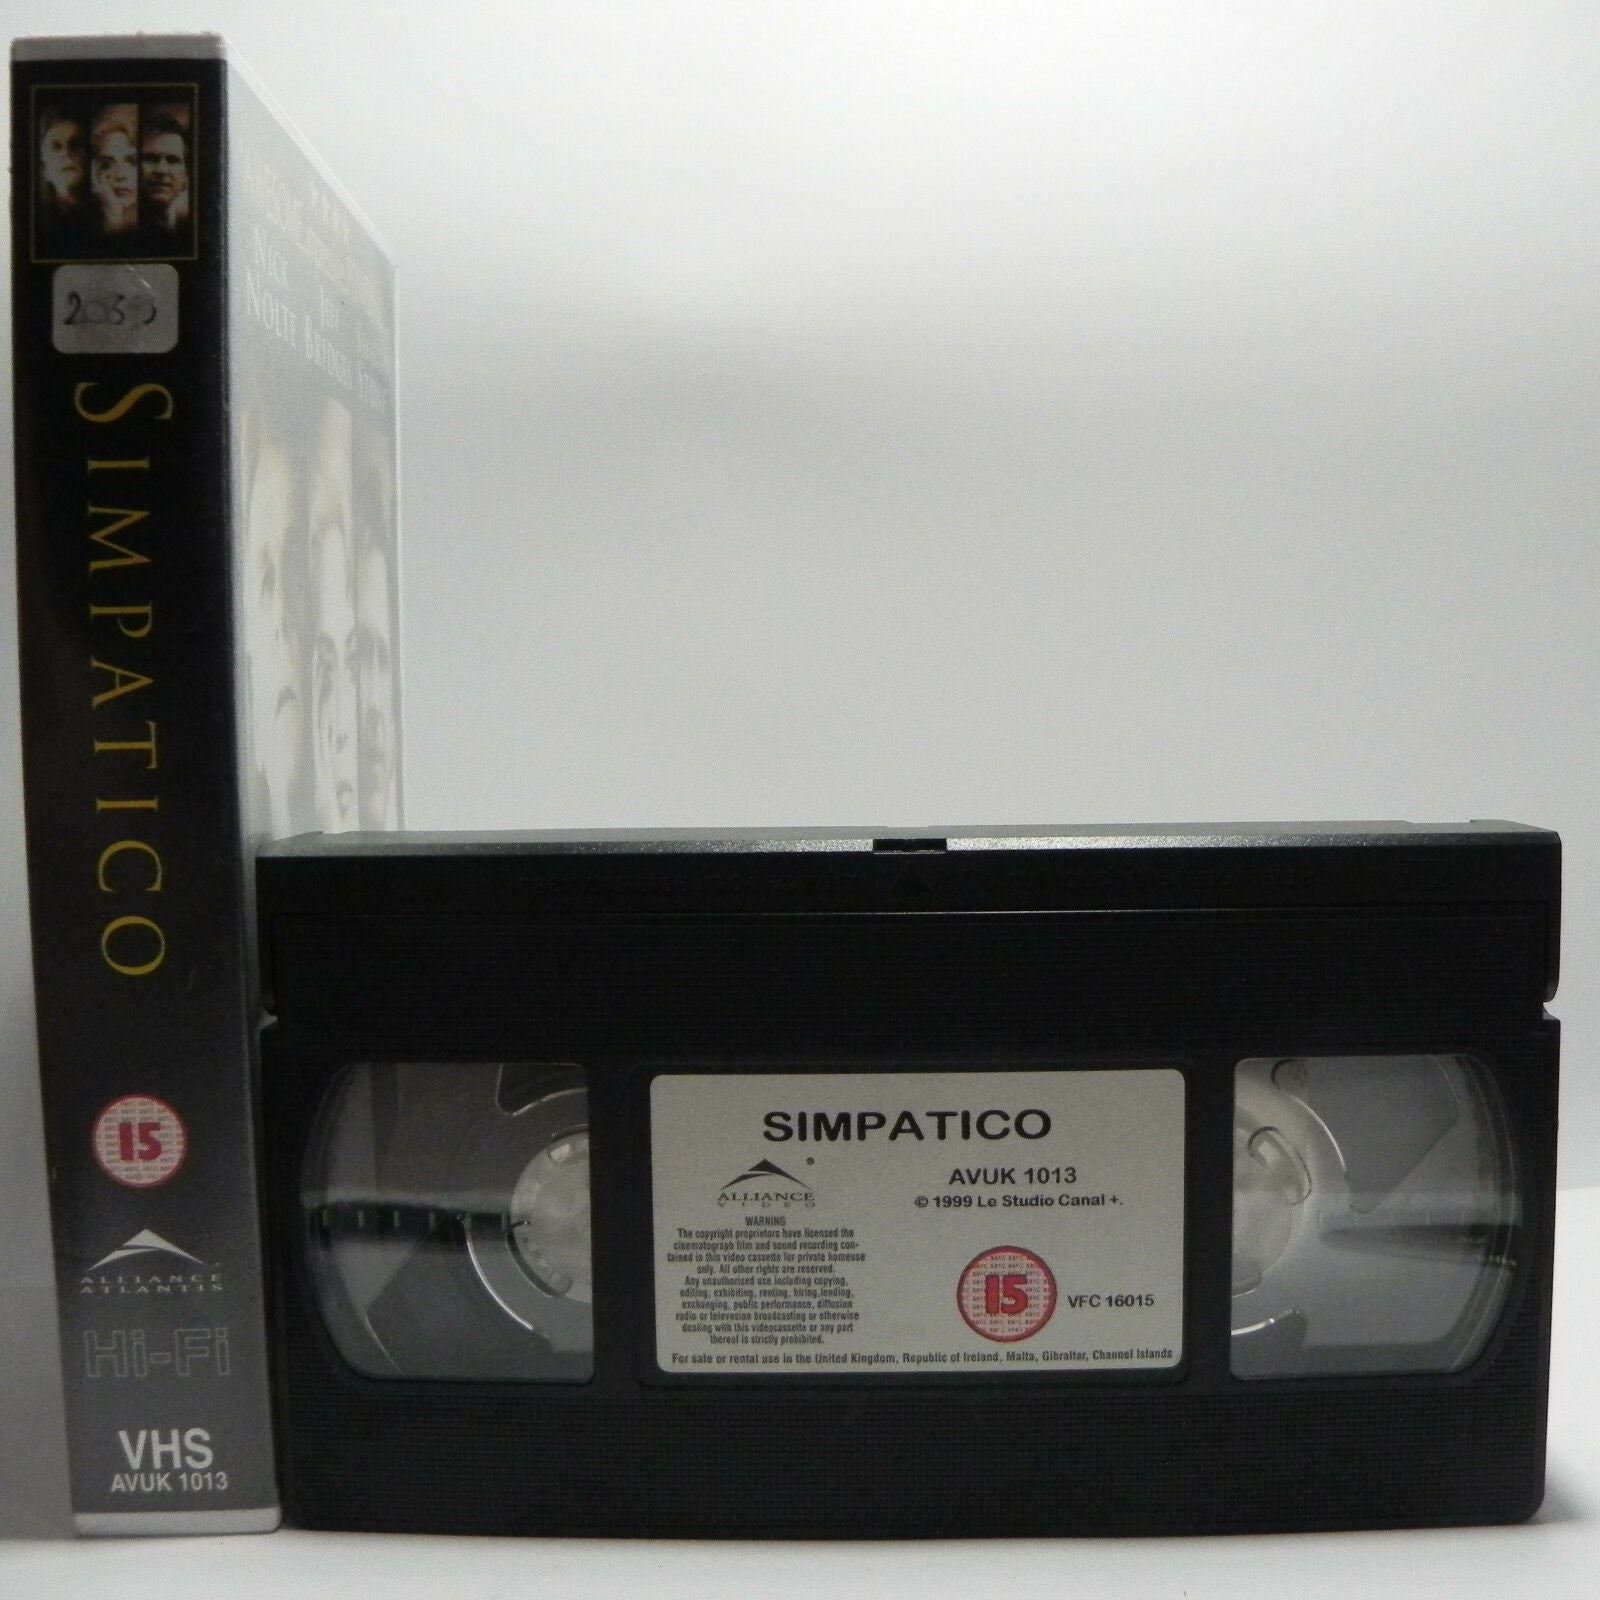 Simpatico: (1999) Thriller - Large Box - Ex-Rental - J.Bridges/S.Stone - Pal VHS-